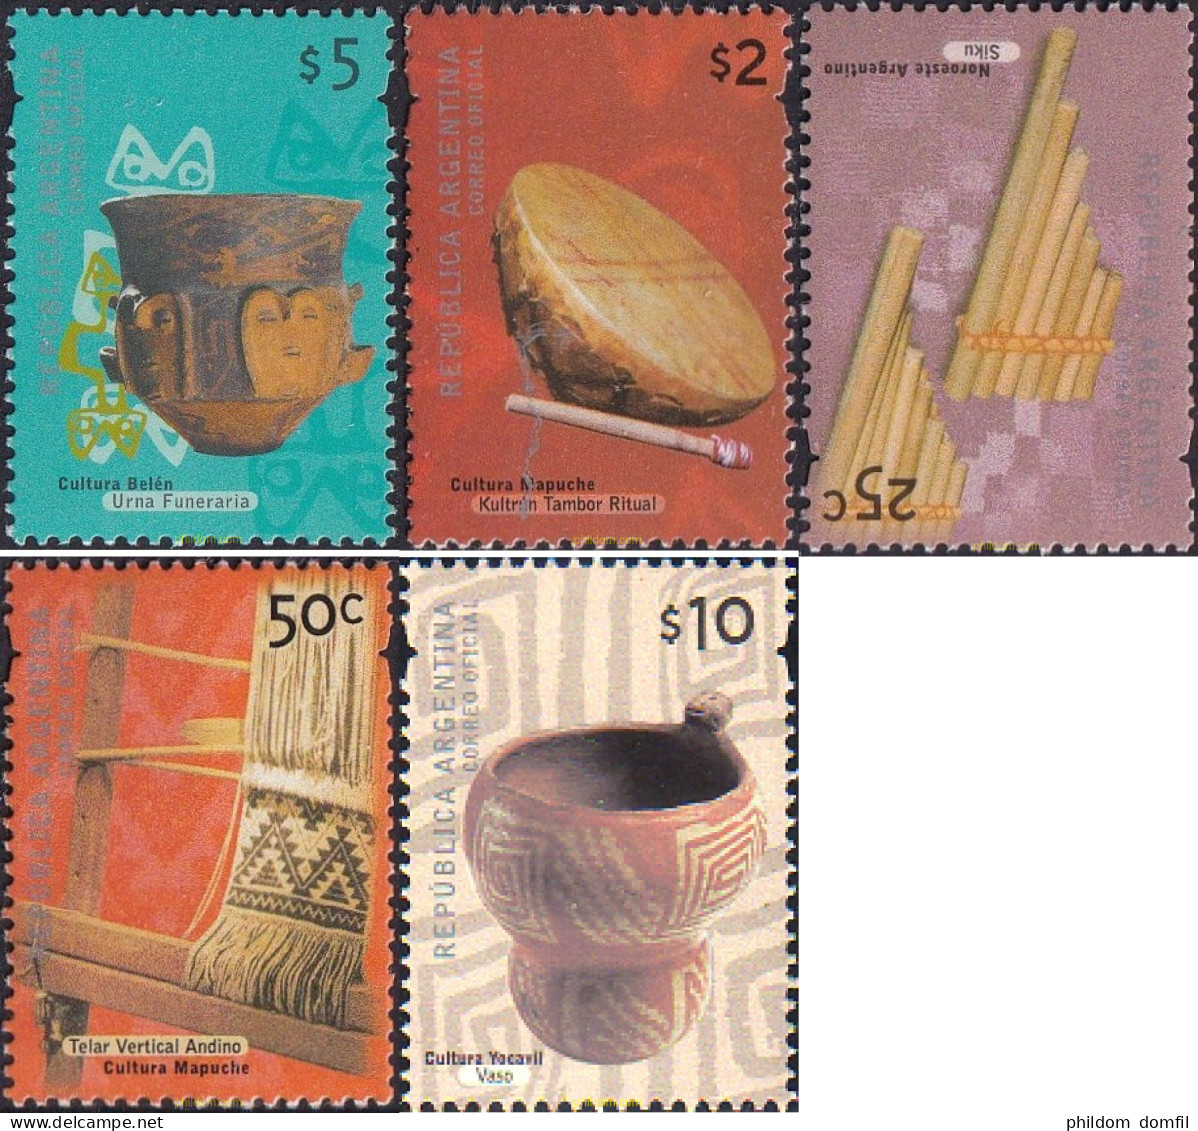 730697 MNH ARGENTINA 2000 OBJETOS TRADICIONALES - Unused Stamps